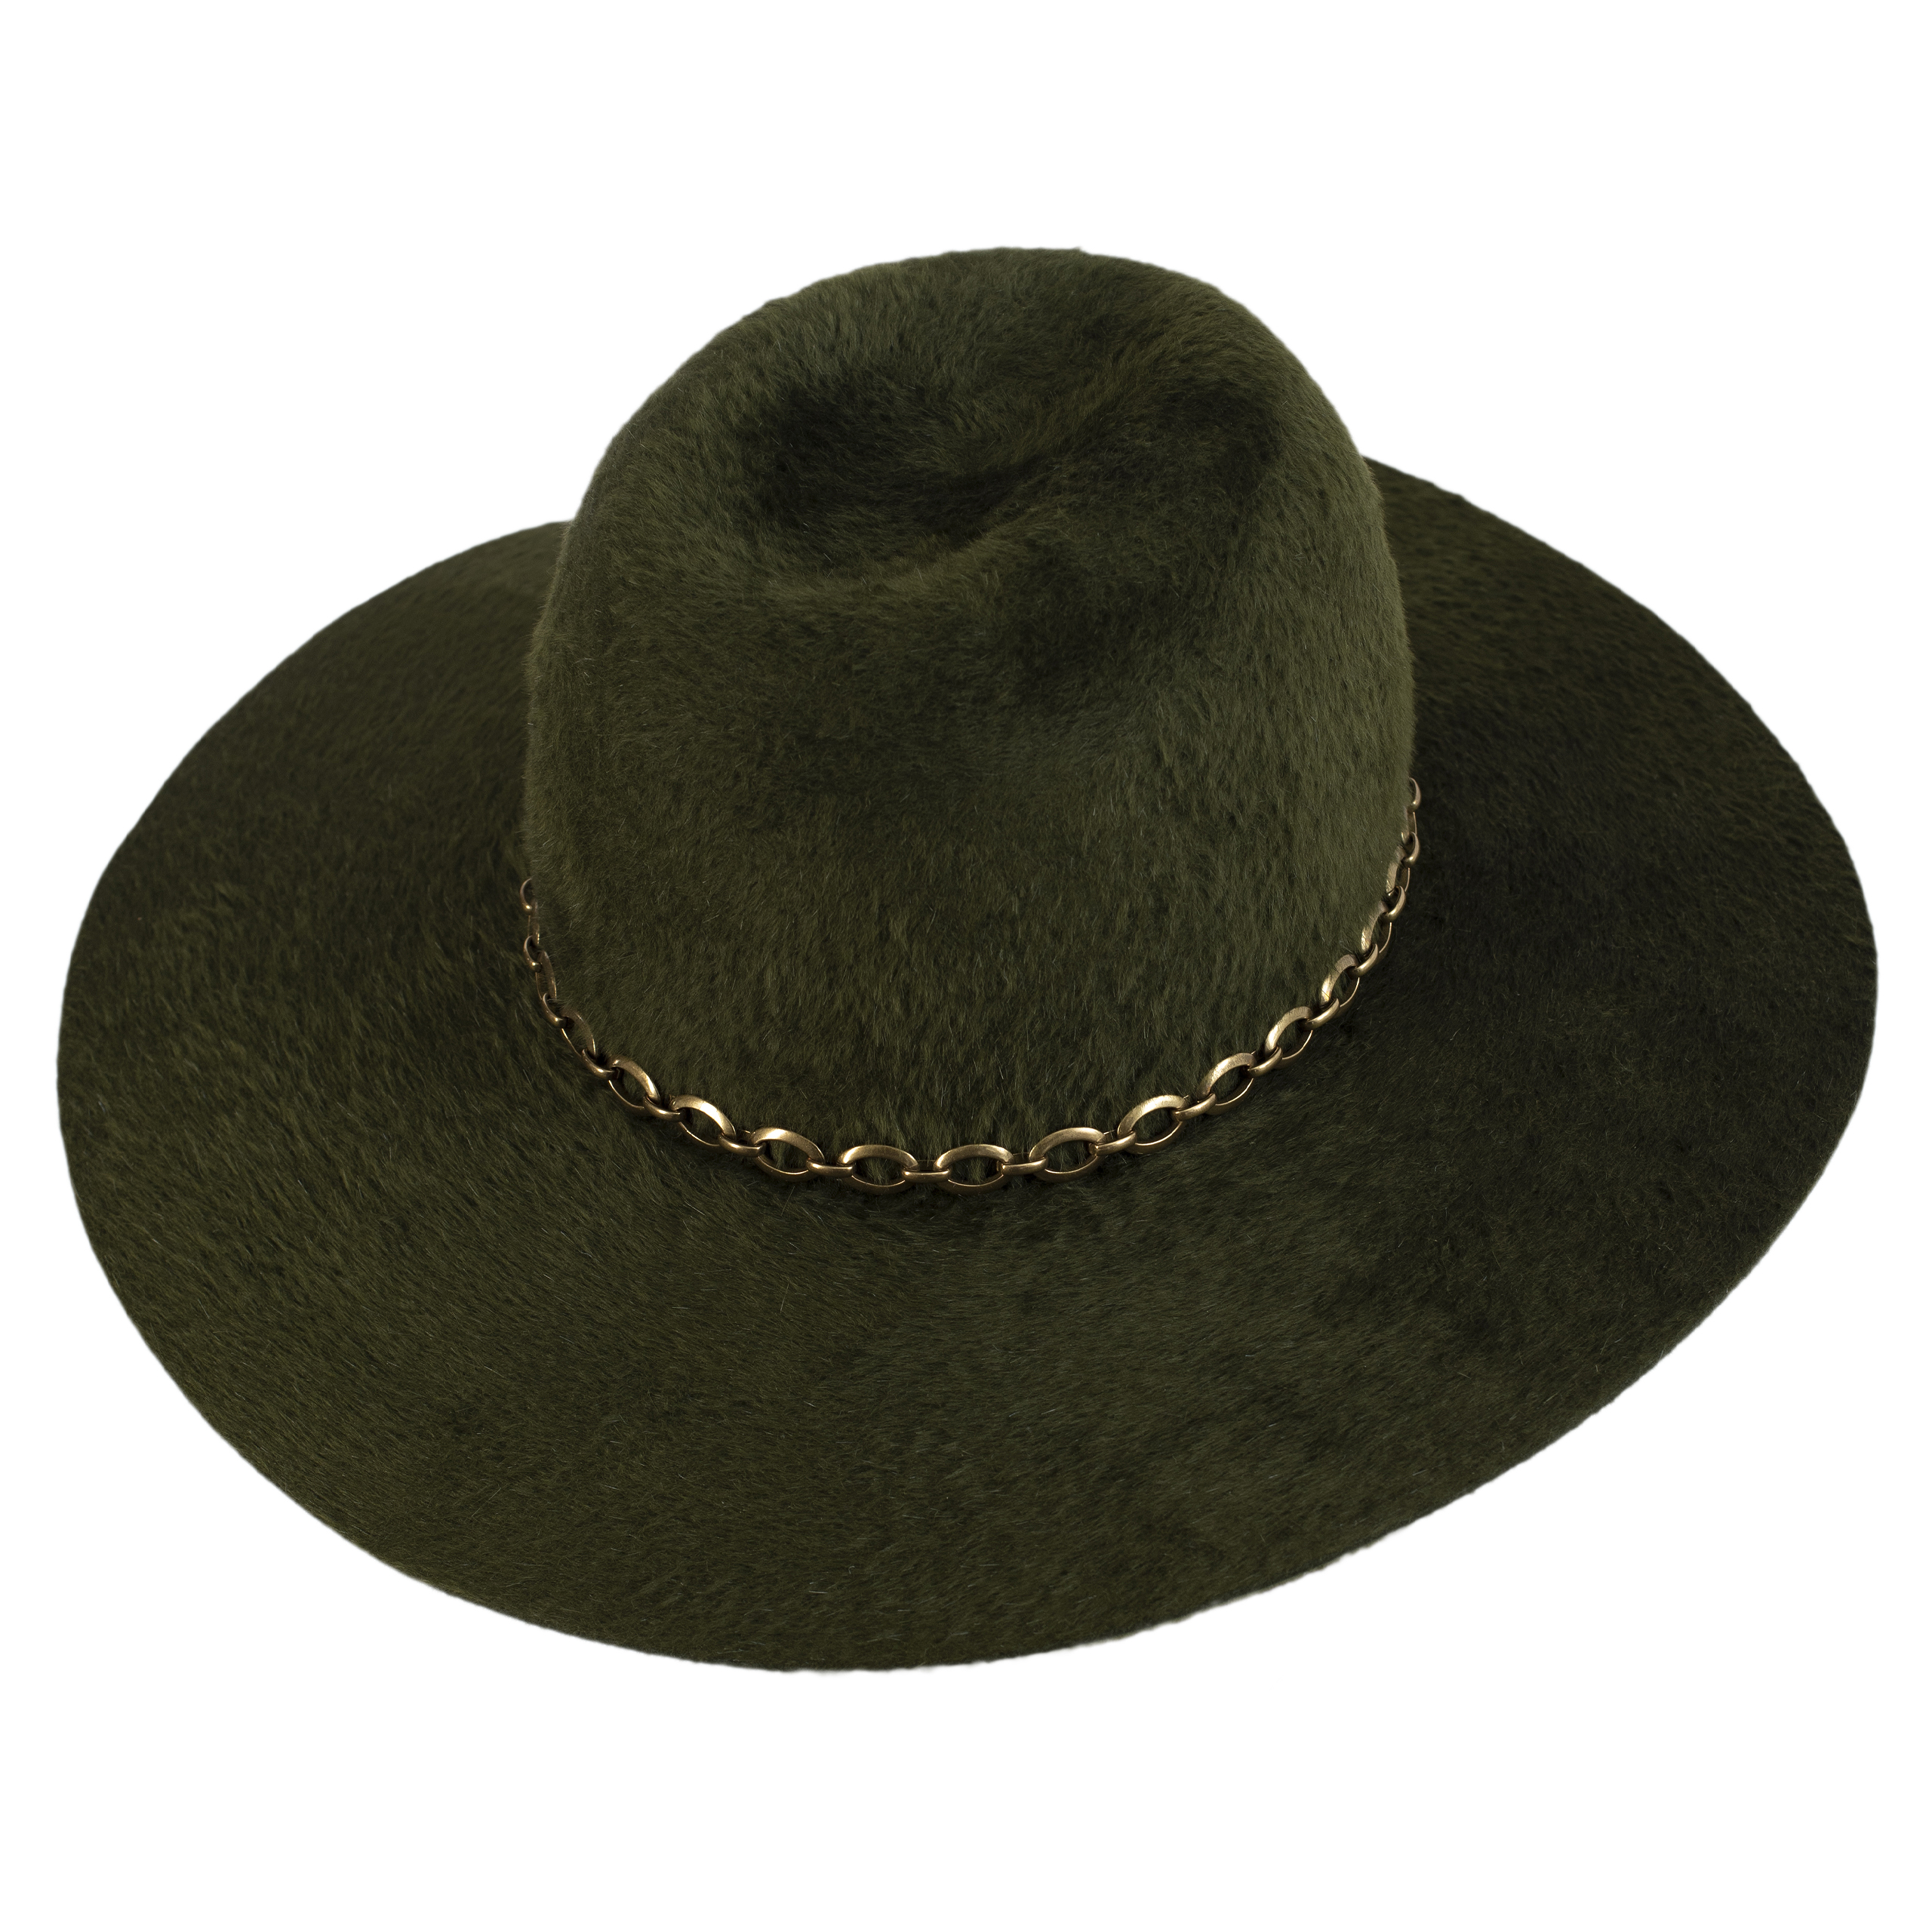 Зеленая шляпа с широкими полями Undercover UC2A1H01/grn, размер 1 UC2A1H01/grn - фото 3